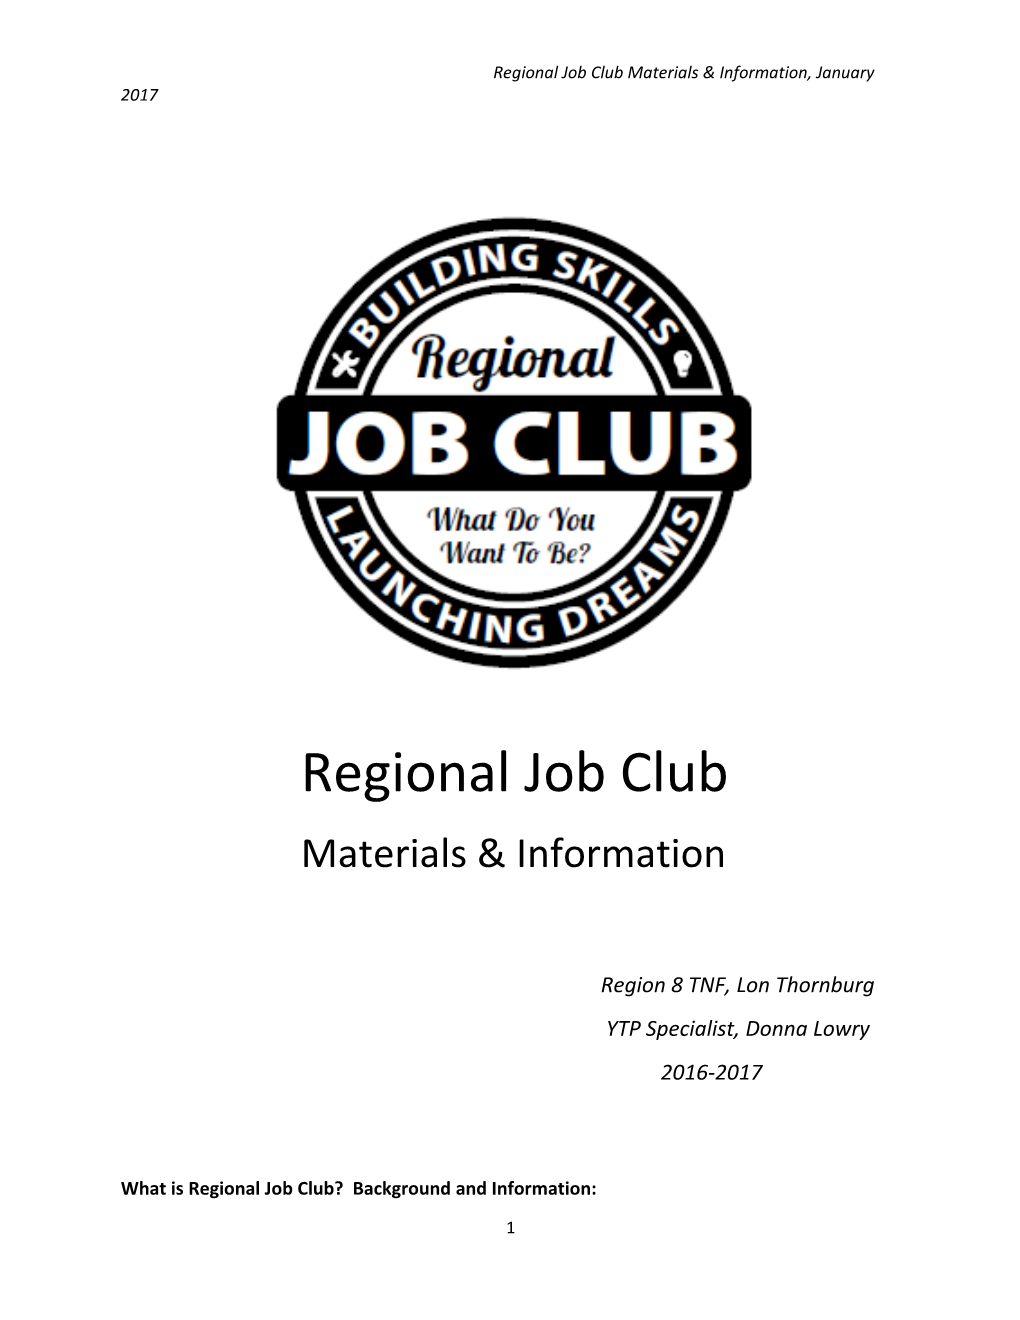 Regional Job Club Materials & Information, January 2017